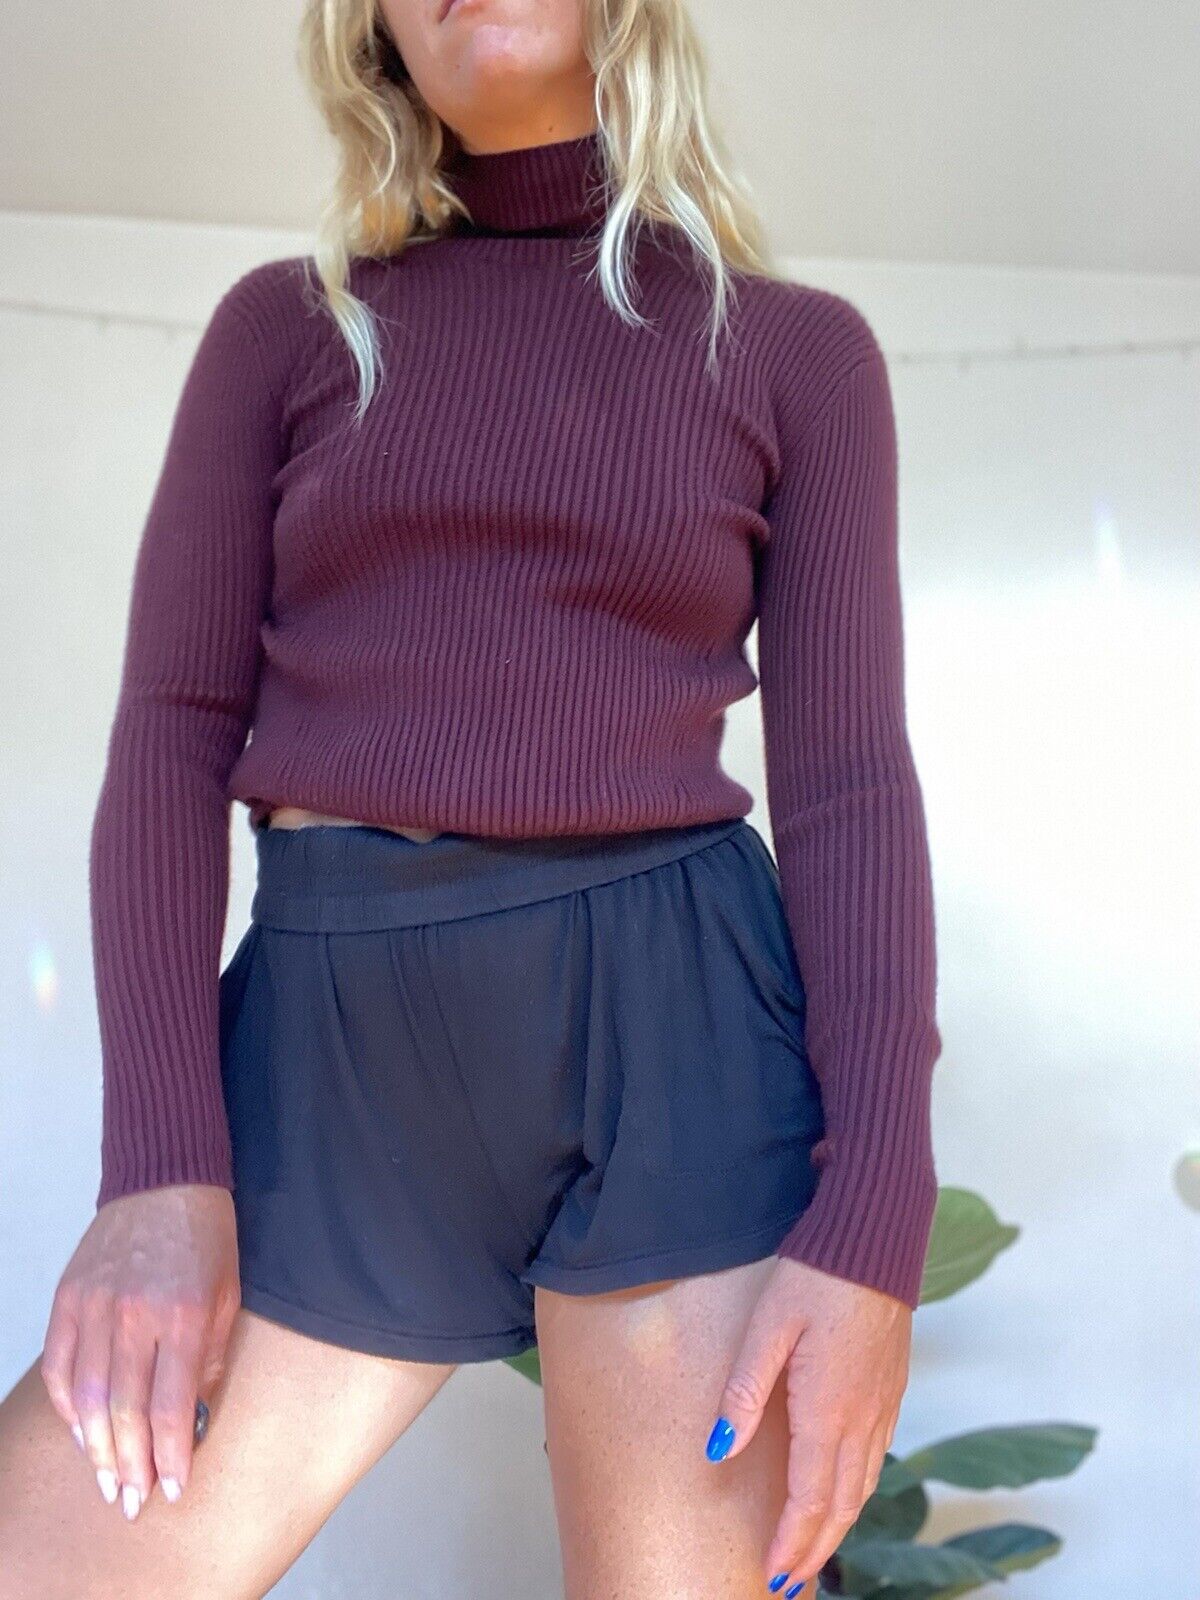 Maroon Turtleneck Sweater - Zara - Size Small